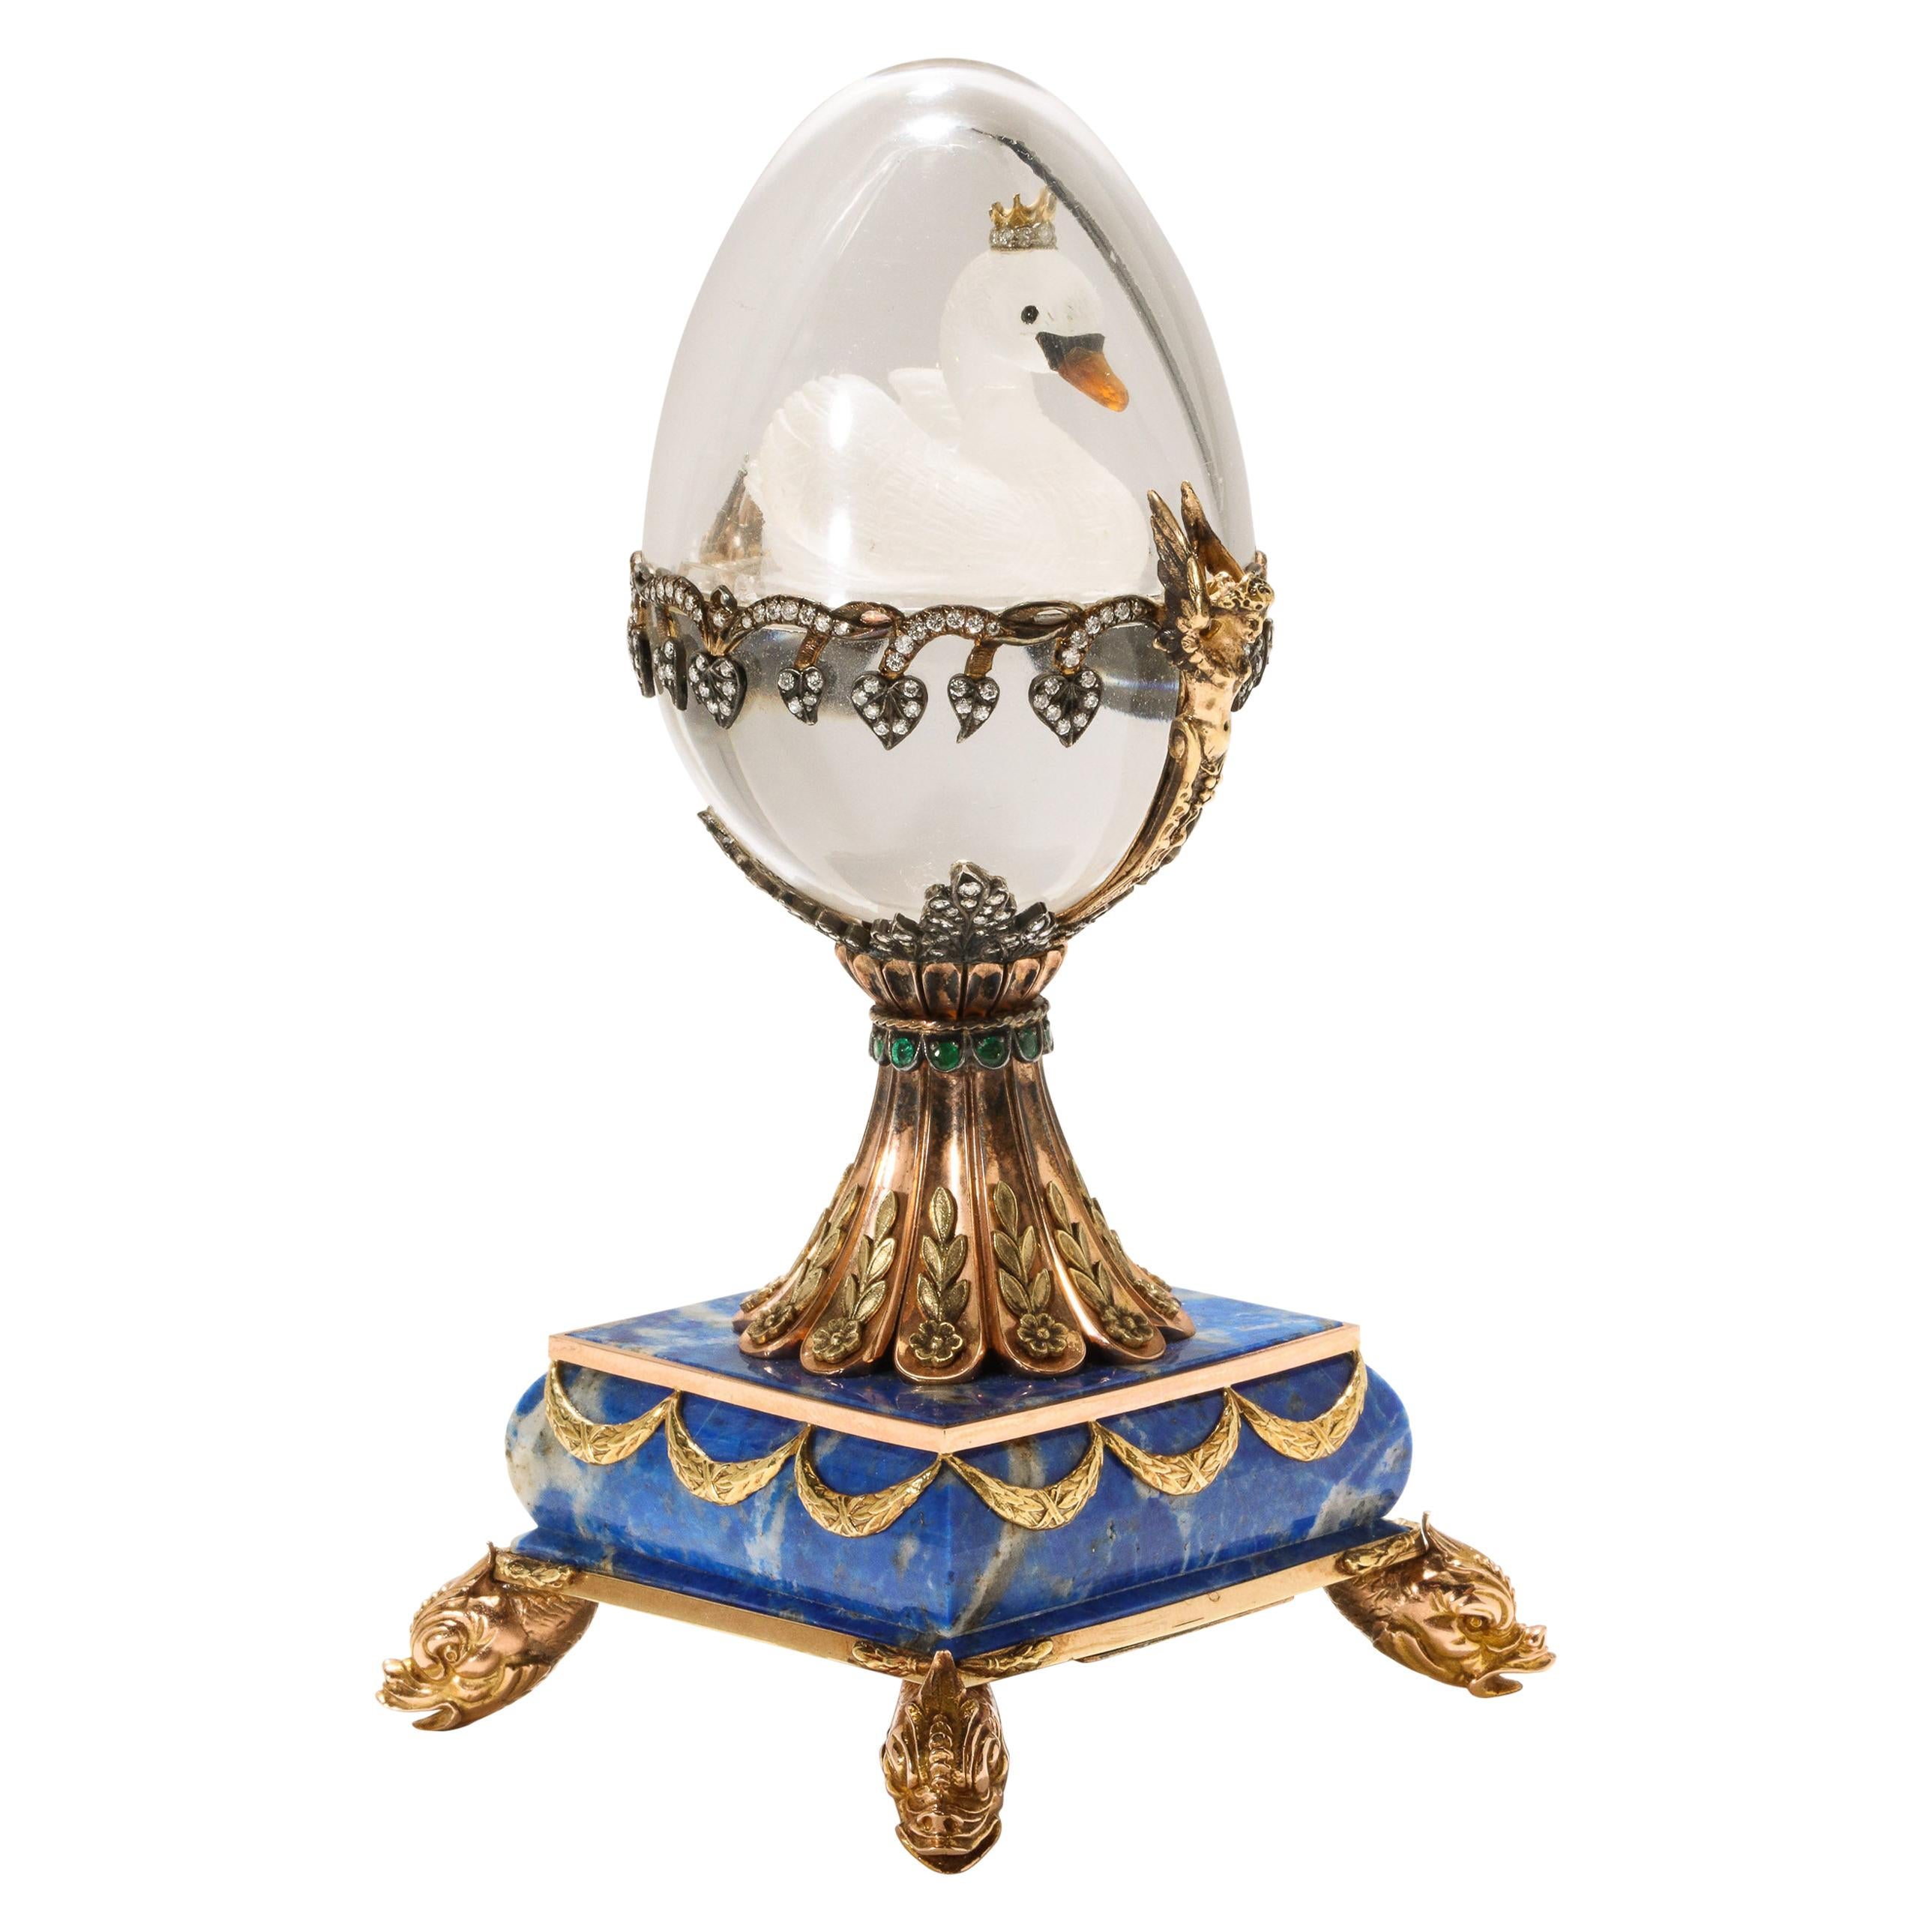 Russian 14-Karat Gold, Diamonds, Emeralds, Lapis Lazuli and Glass Egg with Swan